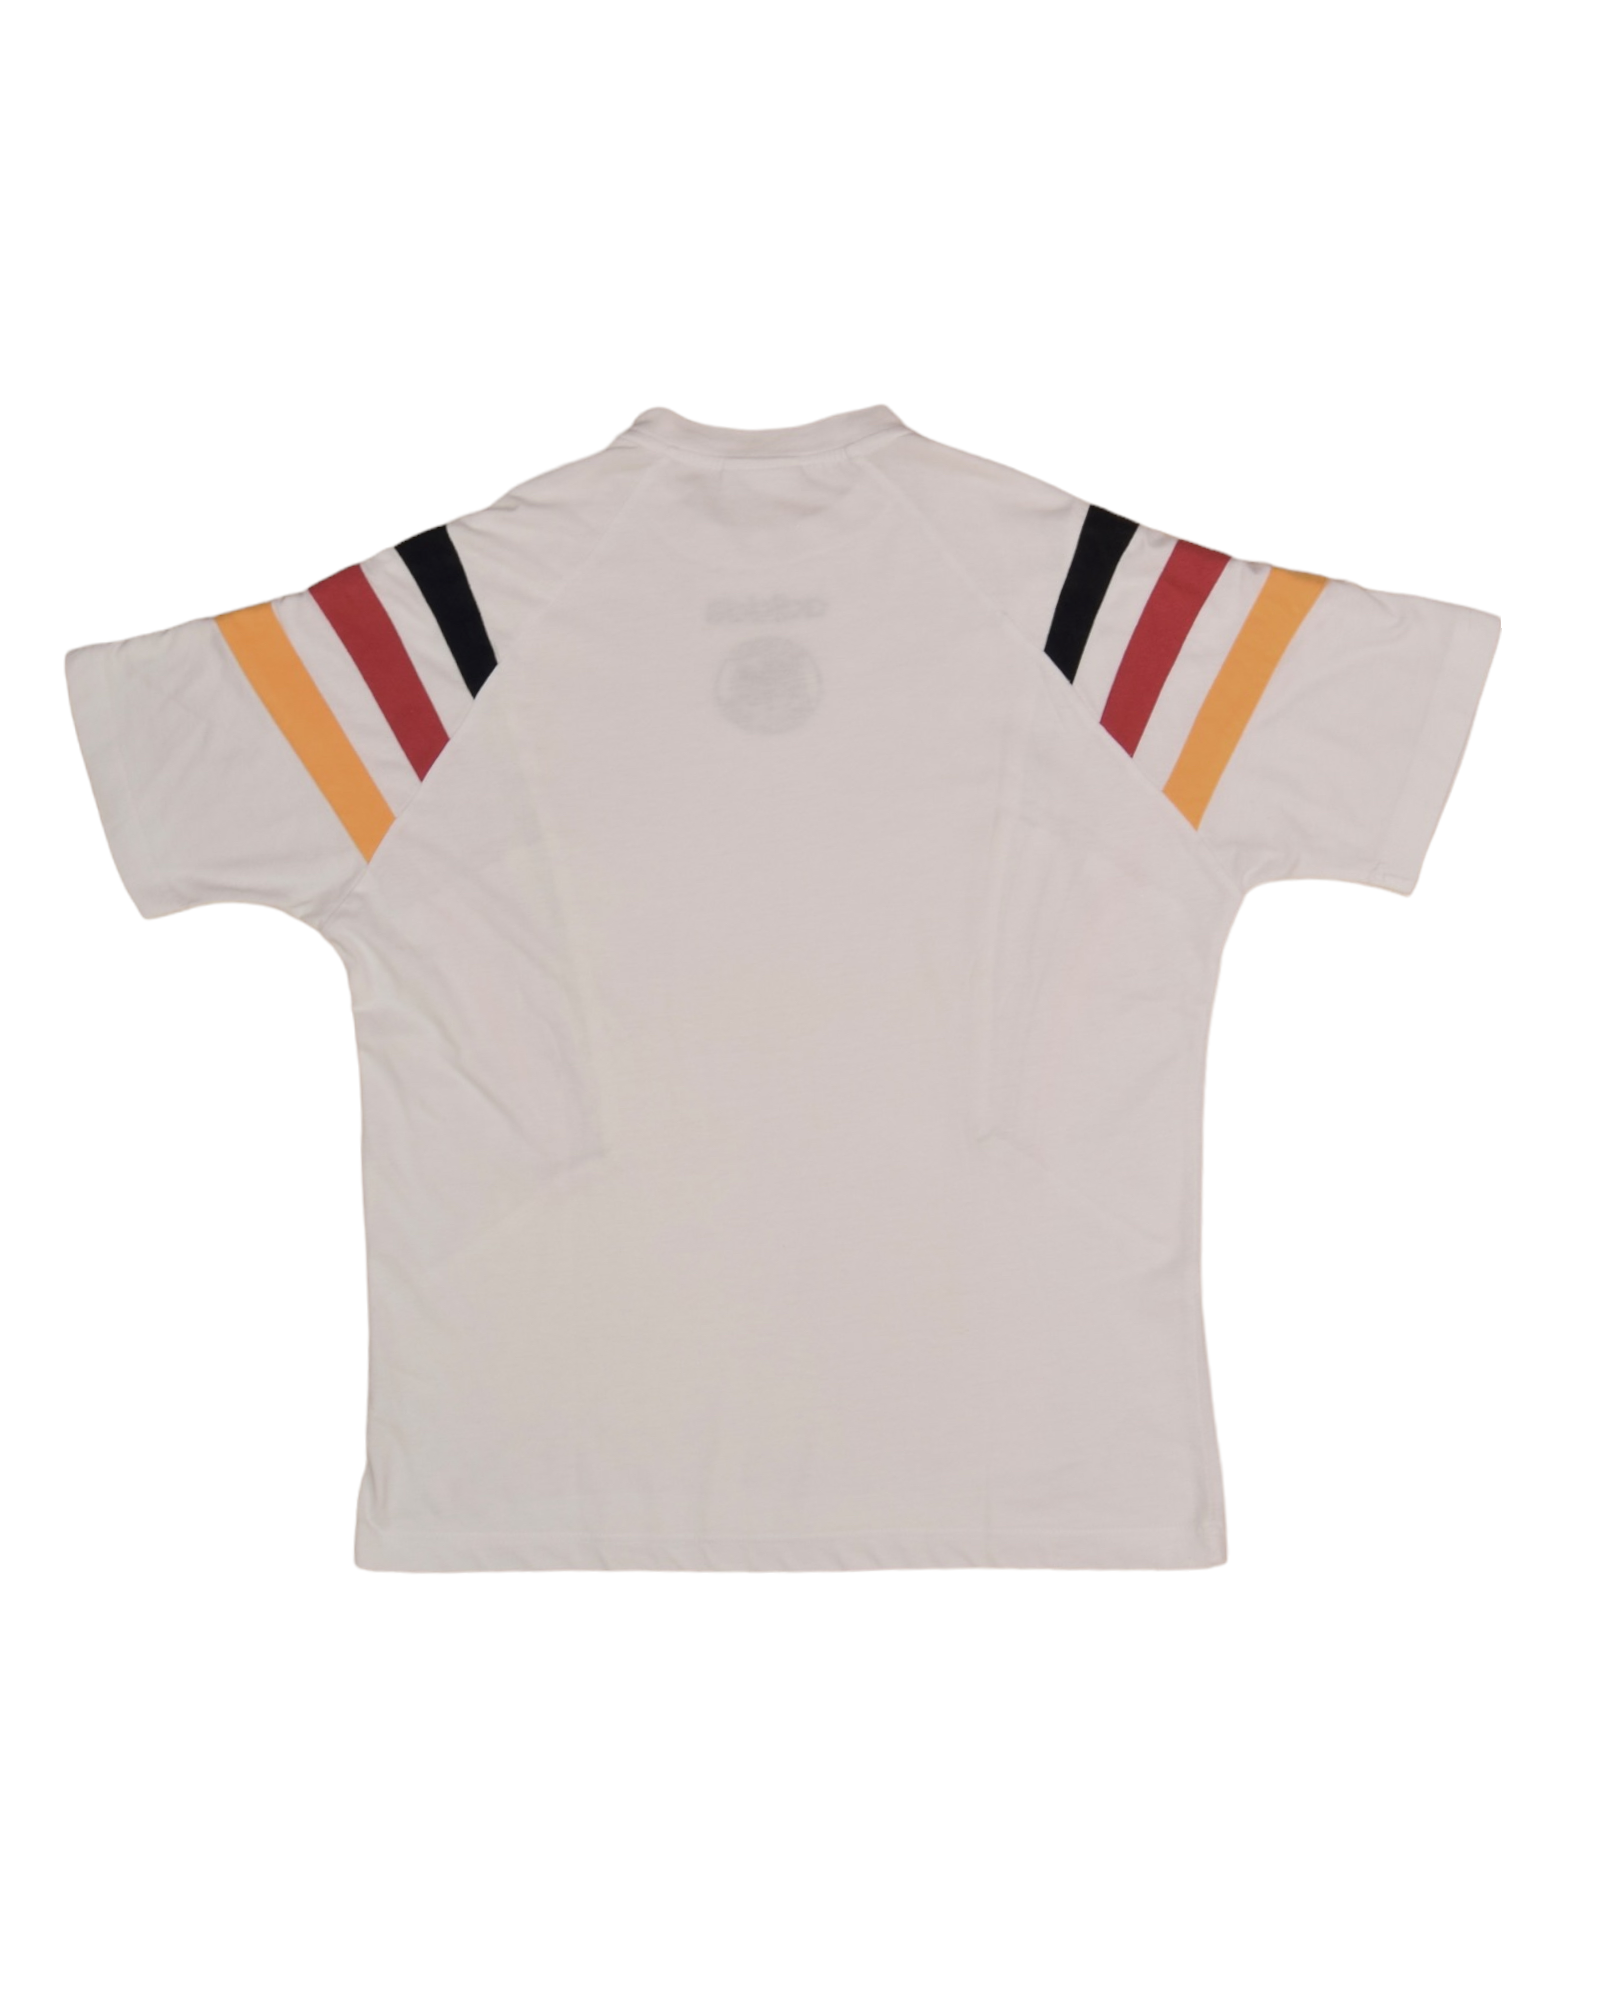 Germany Adidas 1996-1997 Training Shirt / Jersey / Leisure T-Shirt Football Size M White